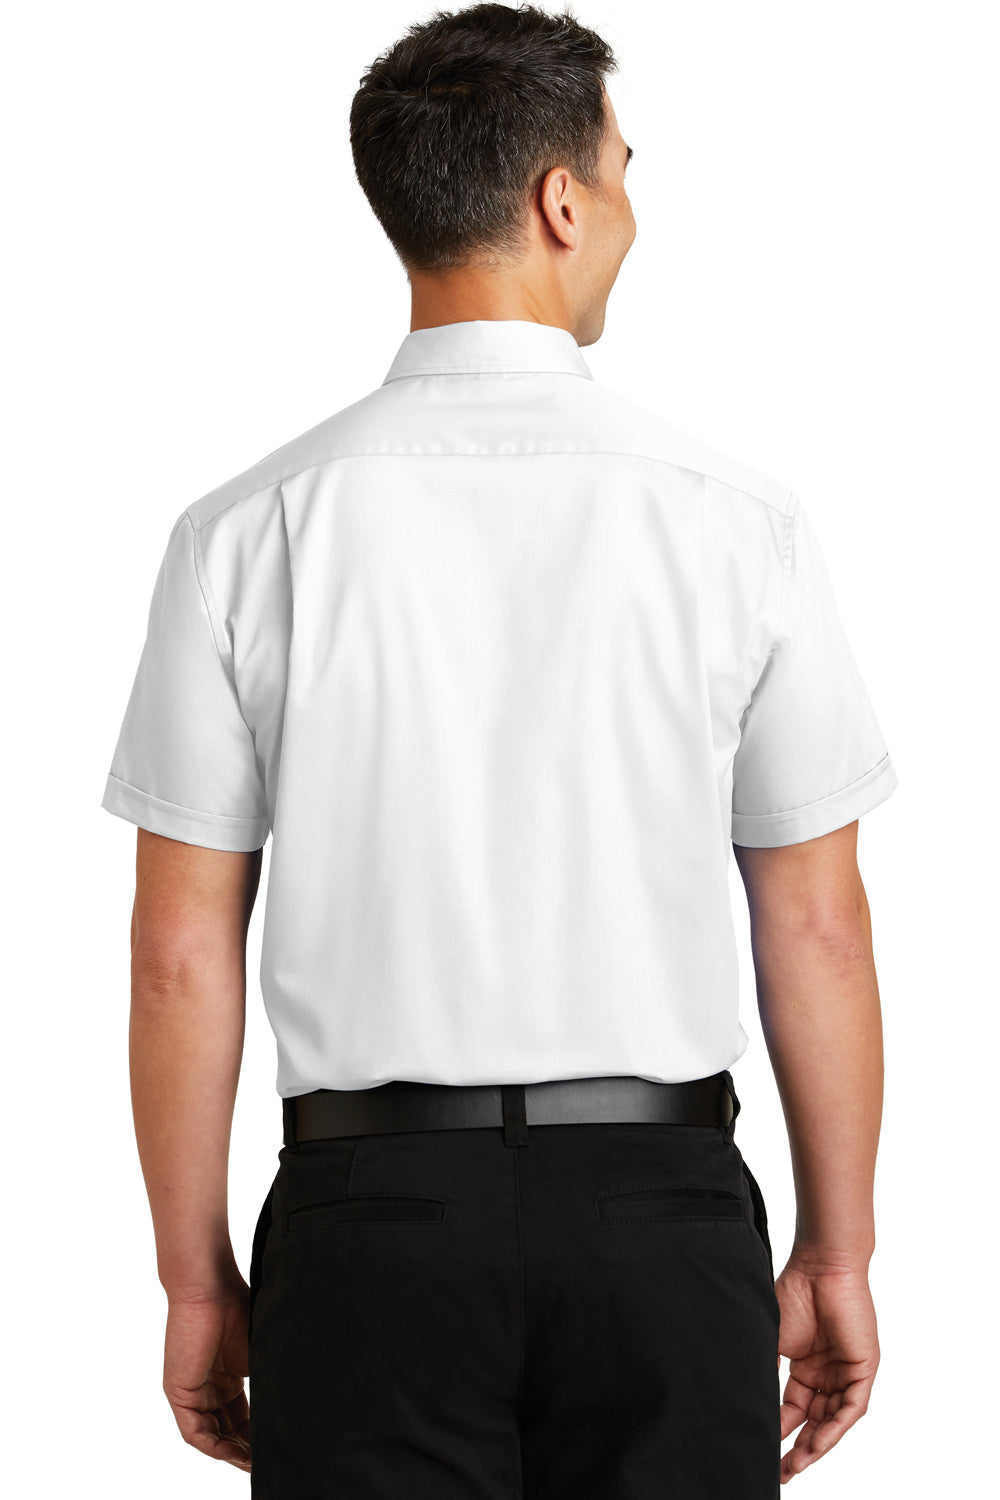 Port Authority S664 Mens SuperPro Wrinkle Resistant Short Sleeve Button Down Shirt w/ Pocket White Back